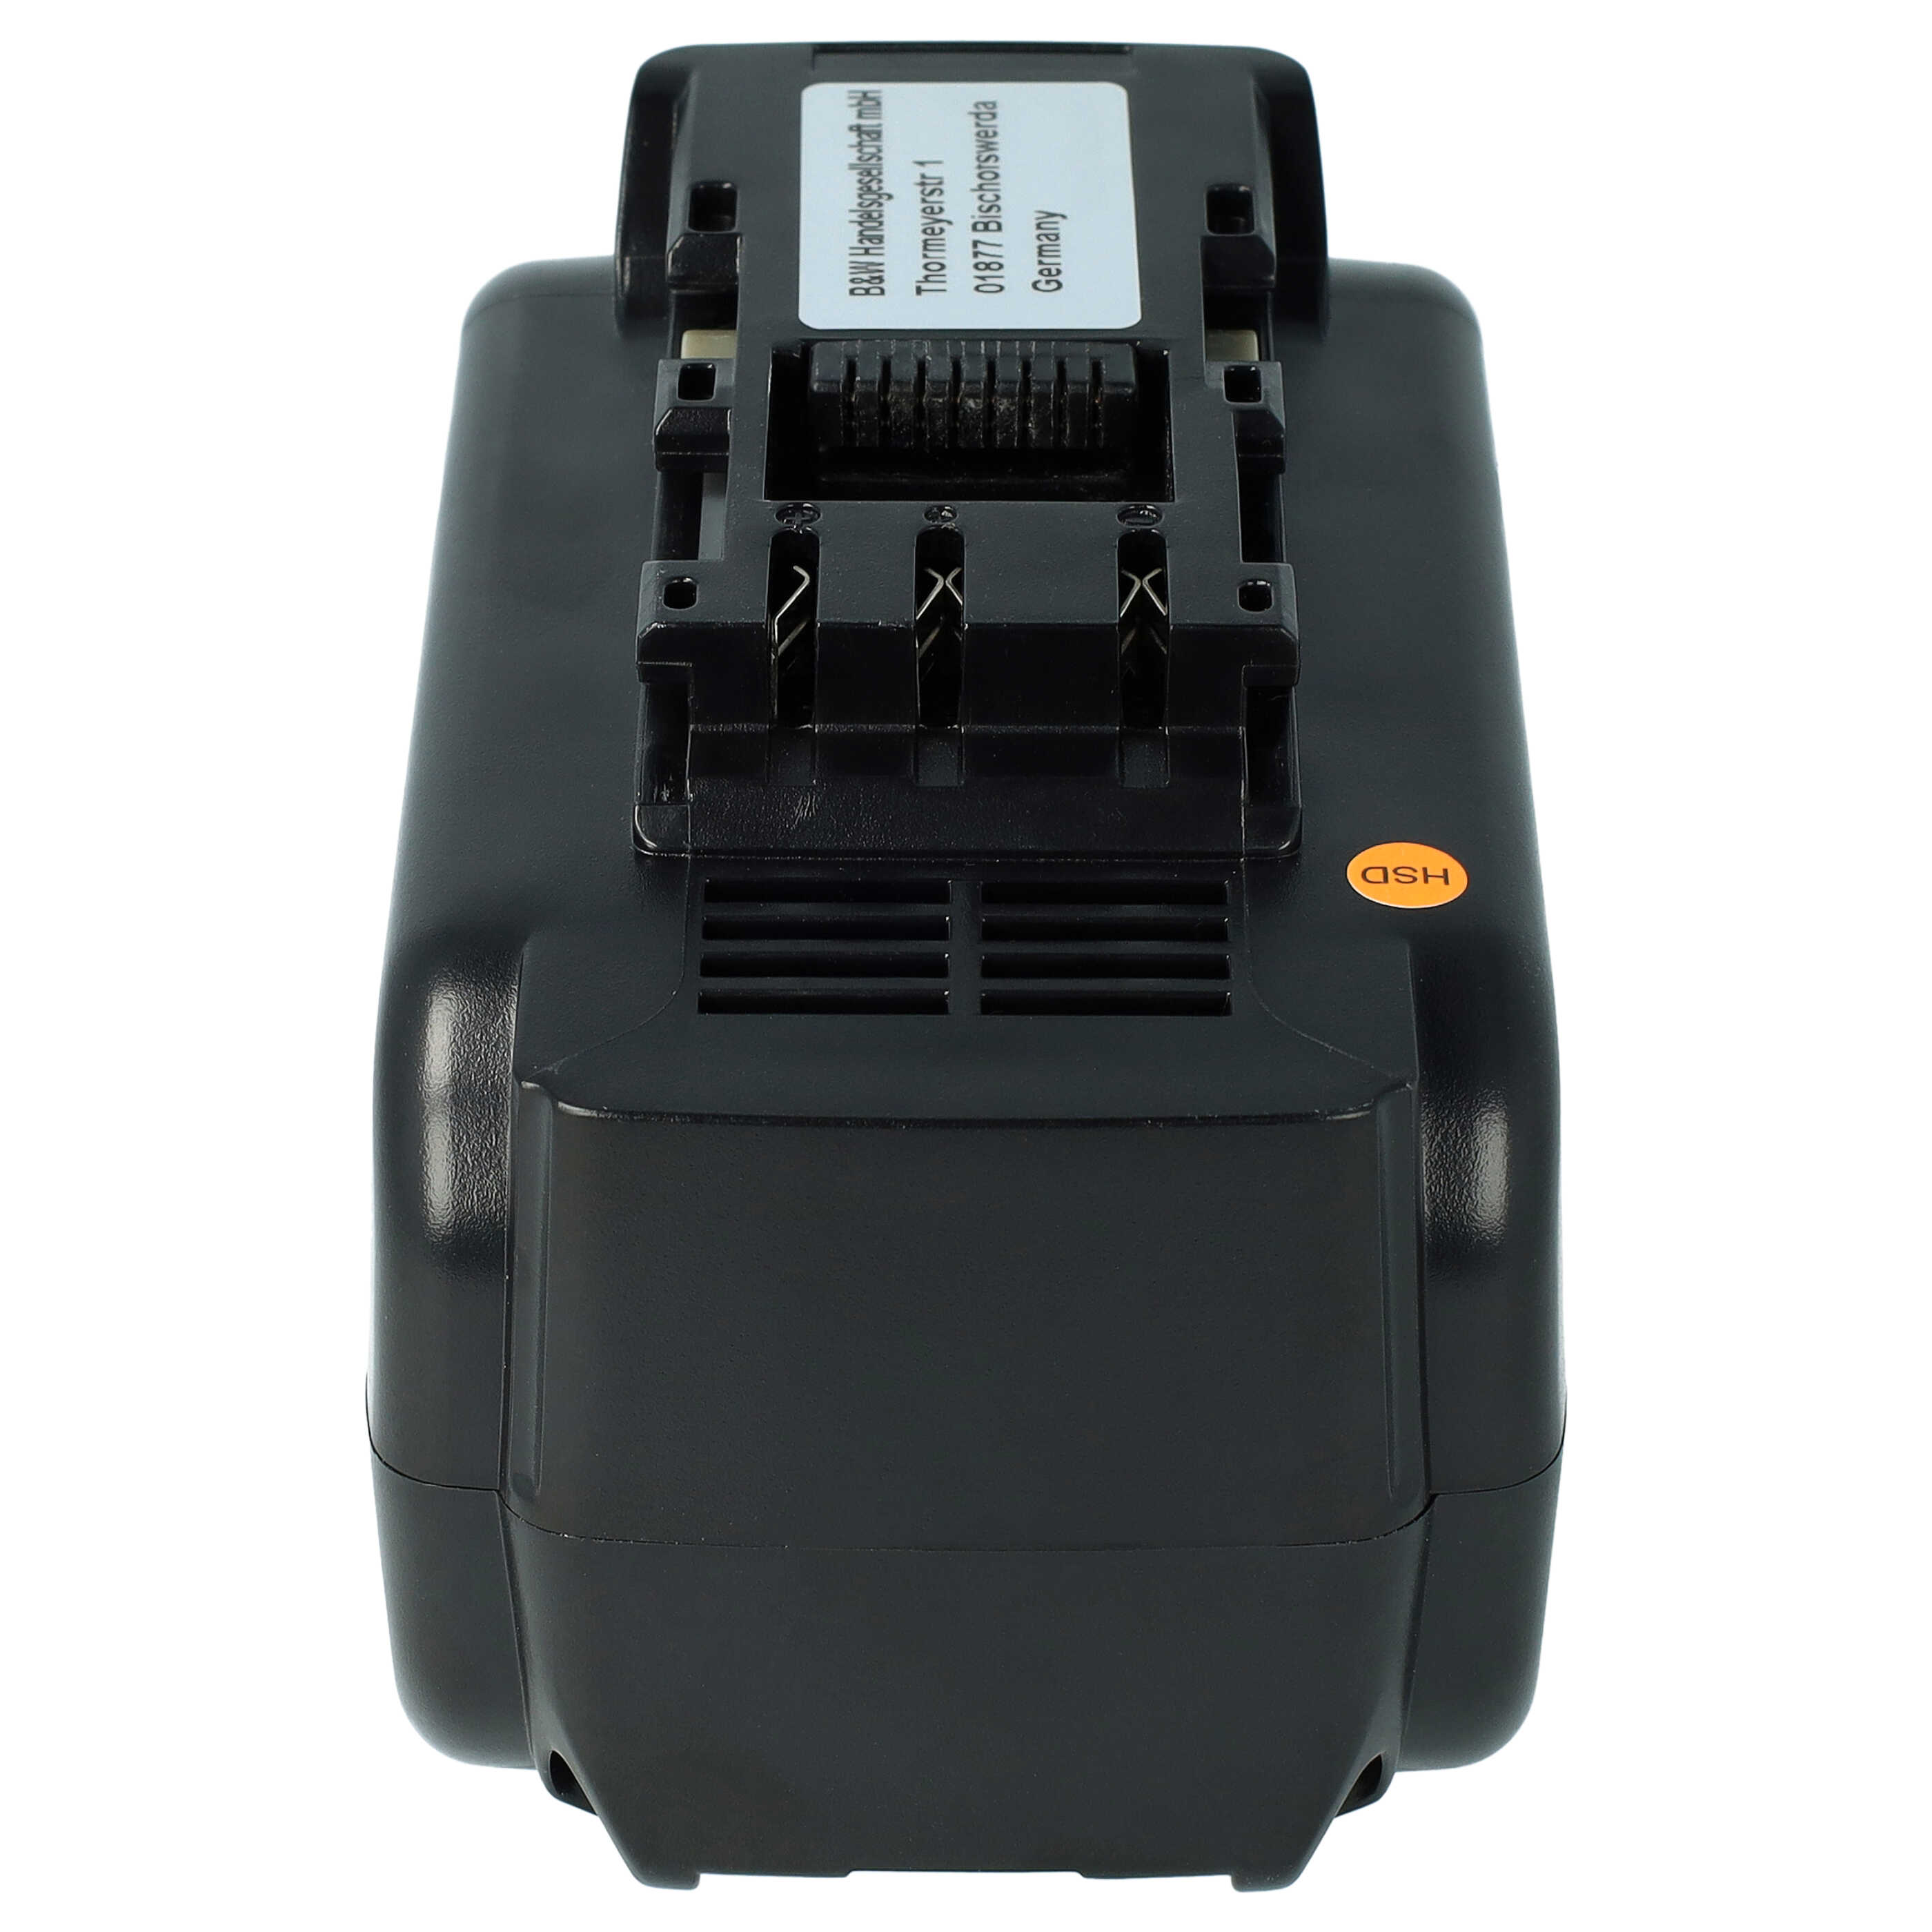 Electric Power Tool Battery Replaces Panasonic EZ9L80, EY9L80B, EY9L80 - 5000 mAh, 28.8 V, Li-Ion